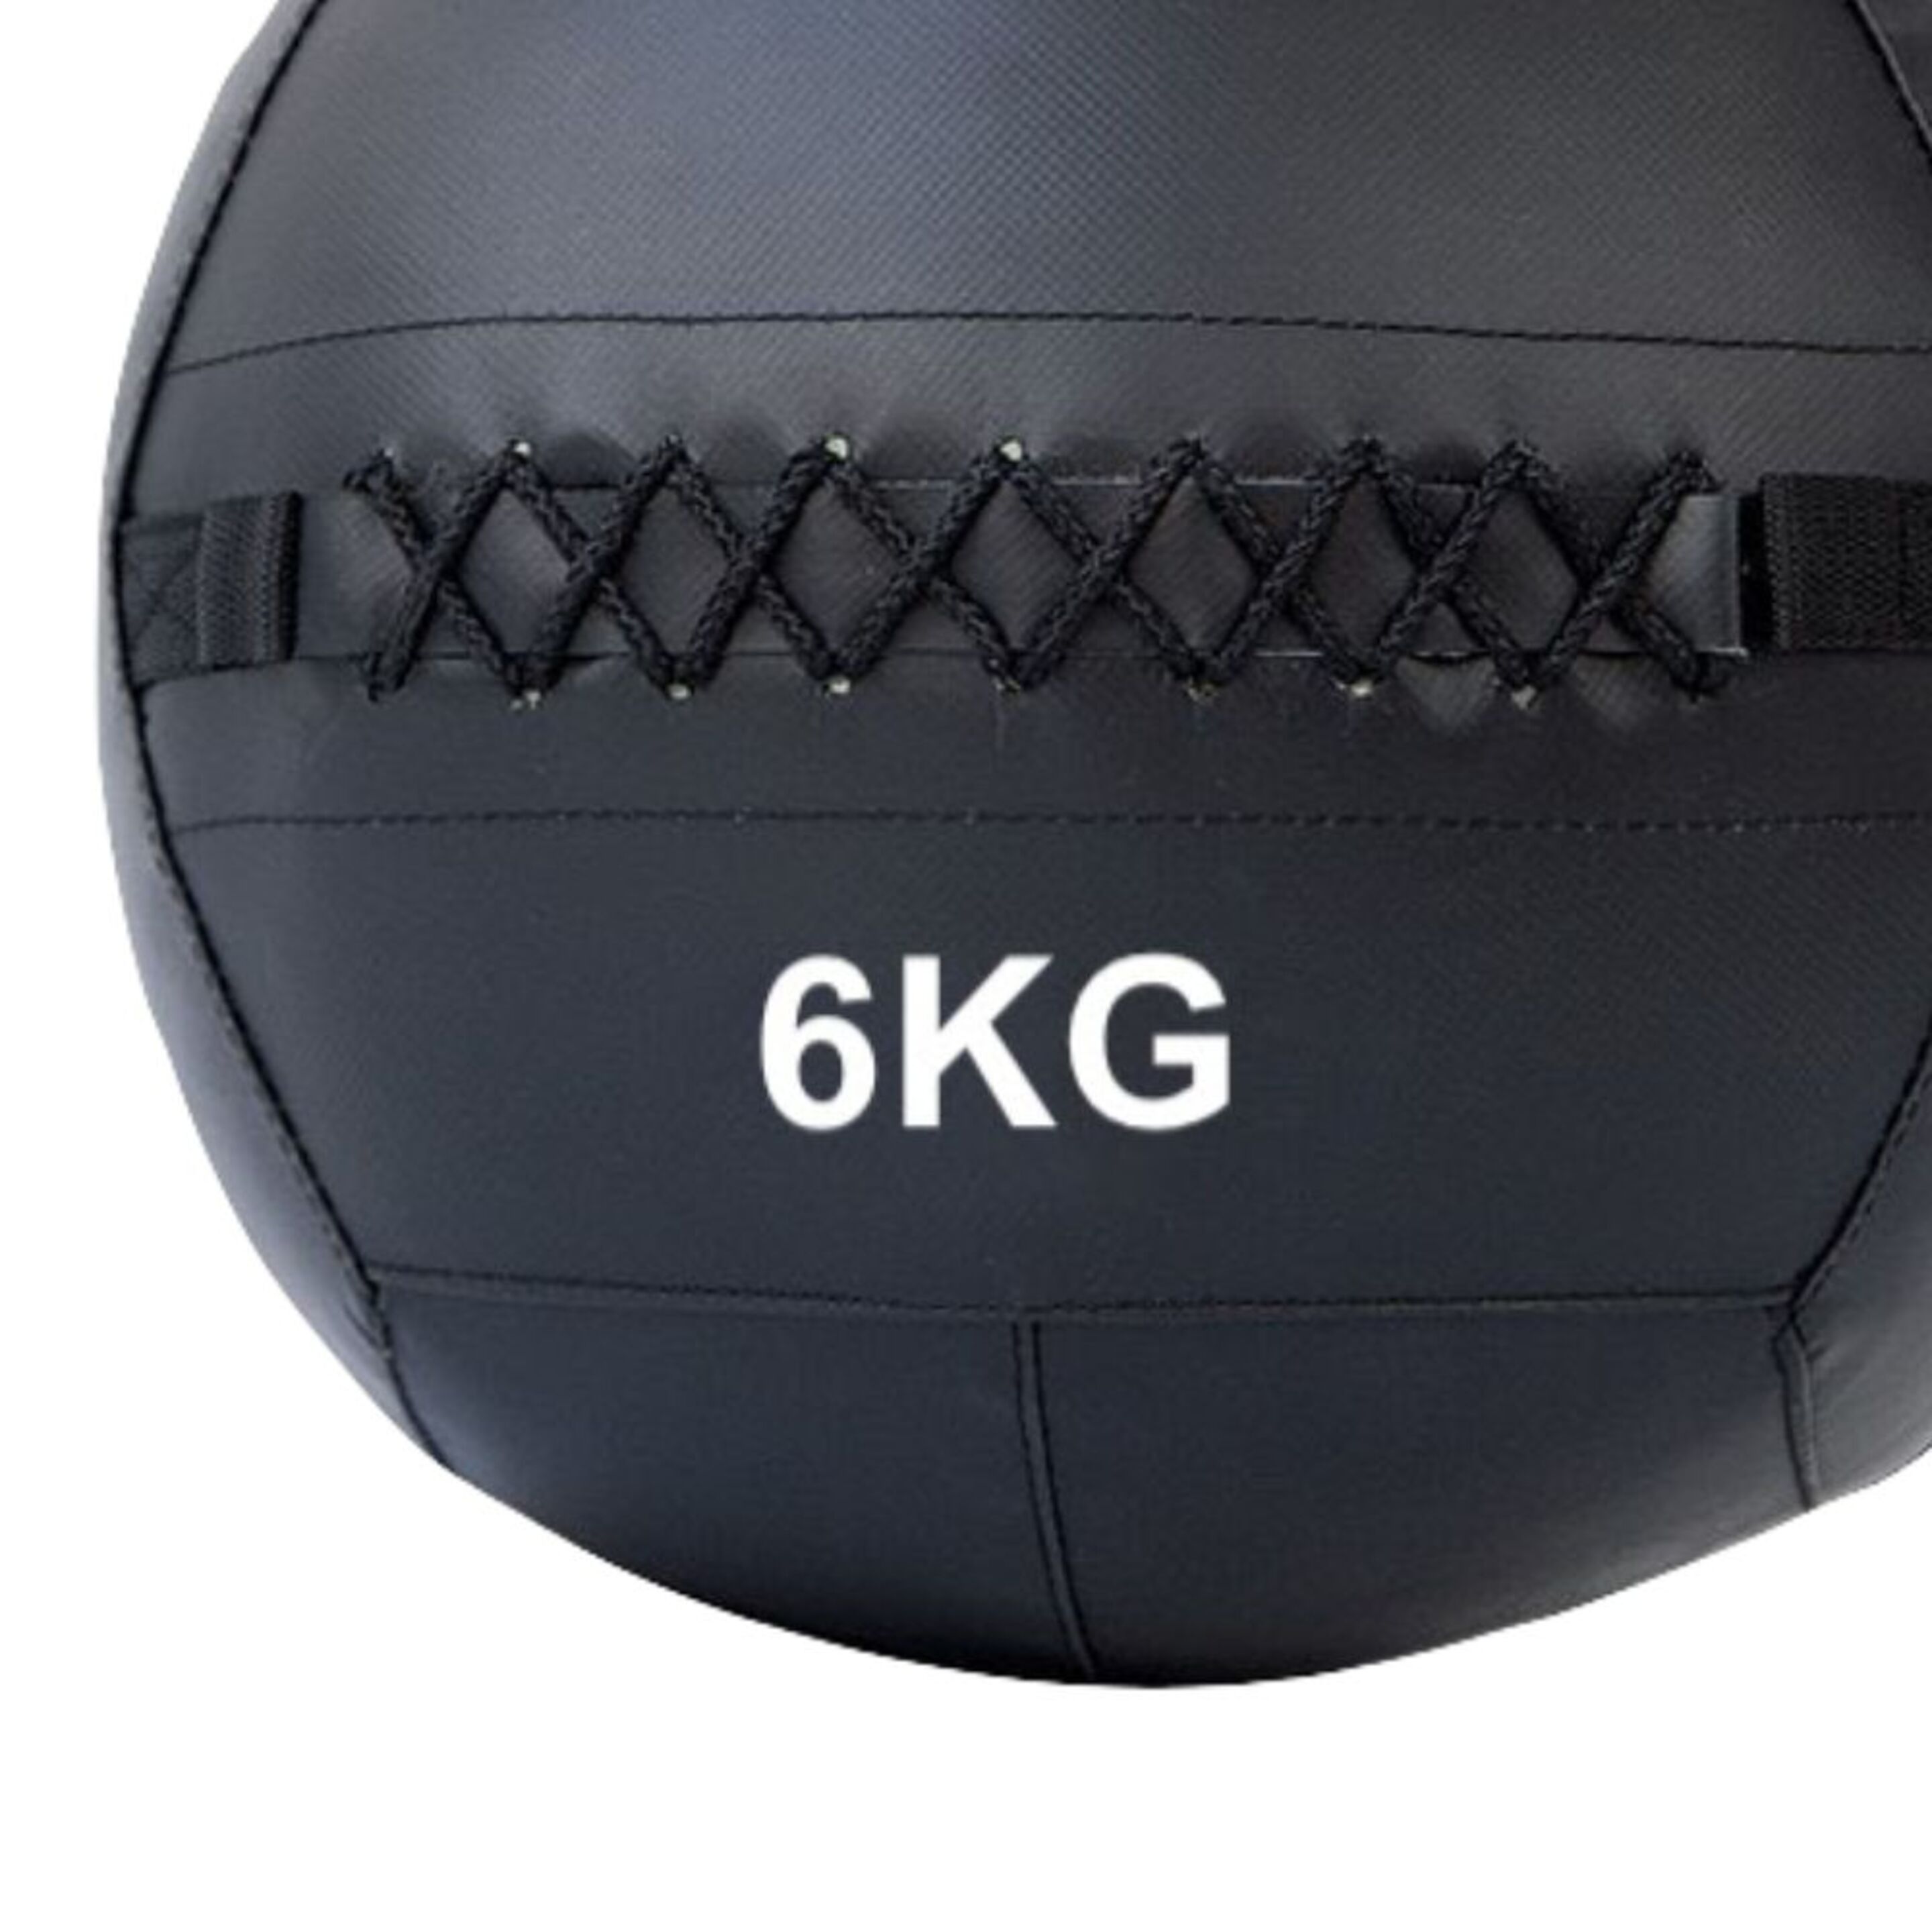 Wall Ball Doble Costura 6kg - Negro - Wall Ball Doble Costura 6kg  MKP